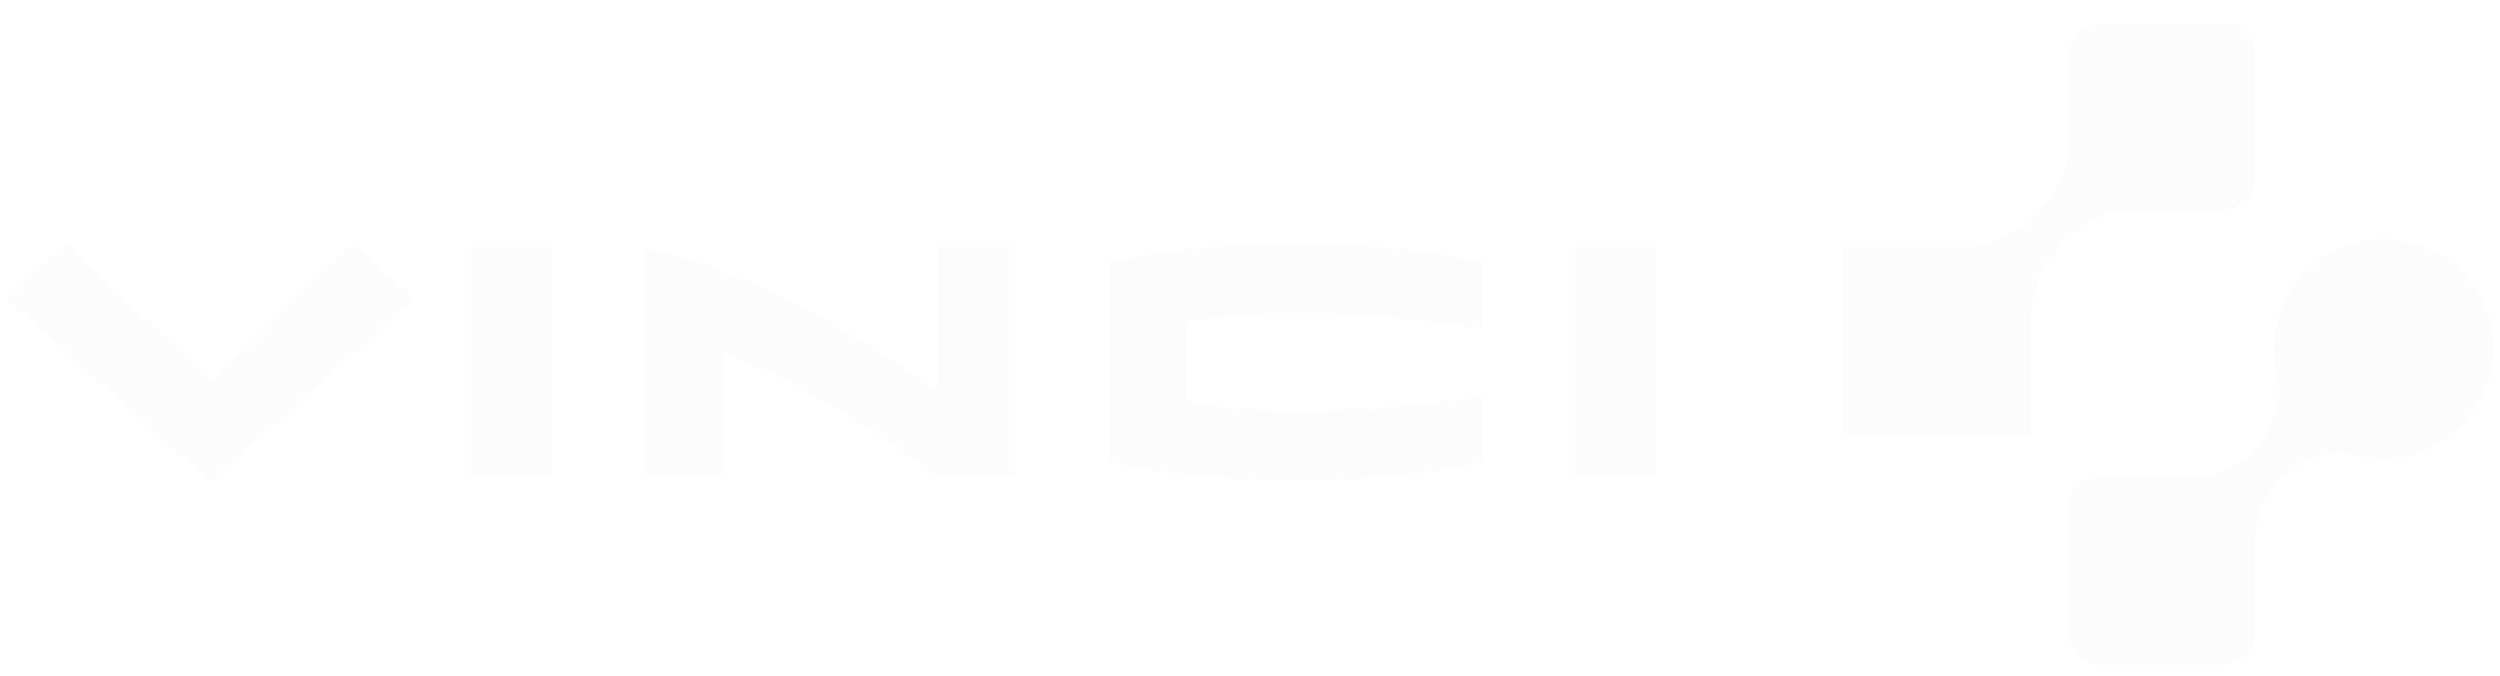 9-logo_vinci(blanc-2000).png